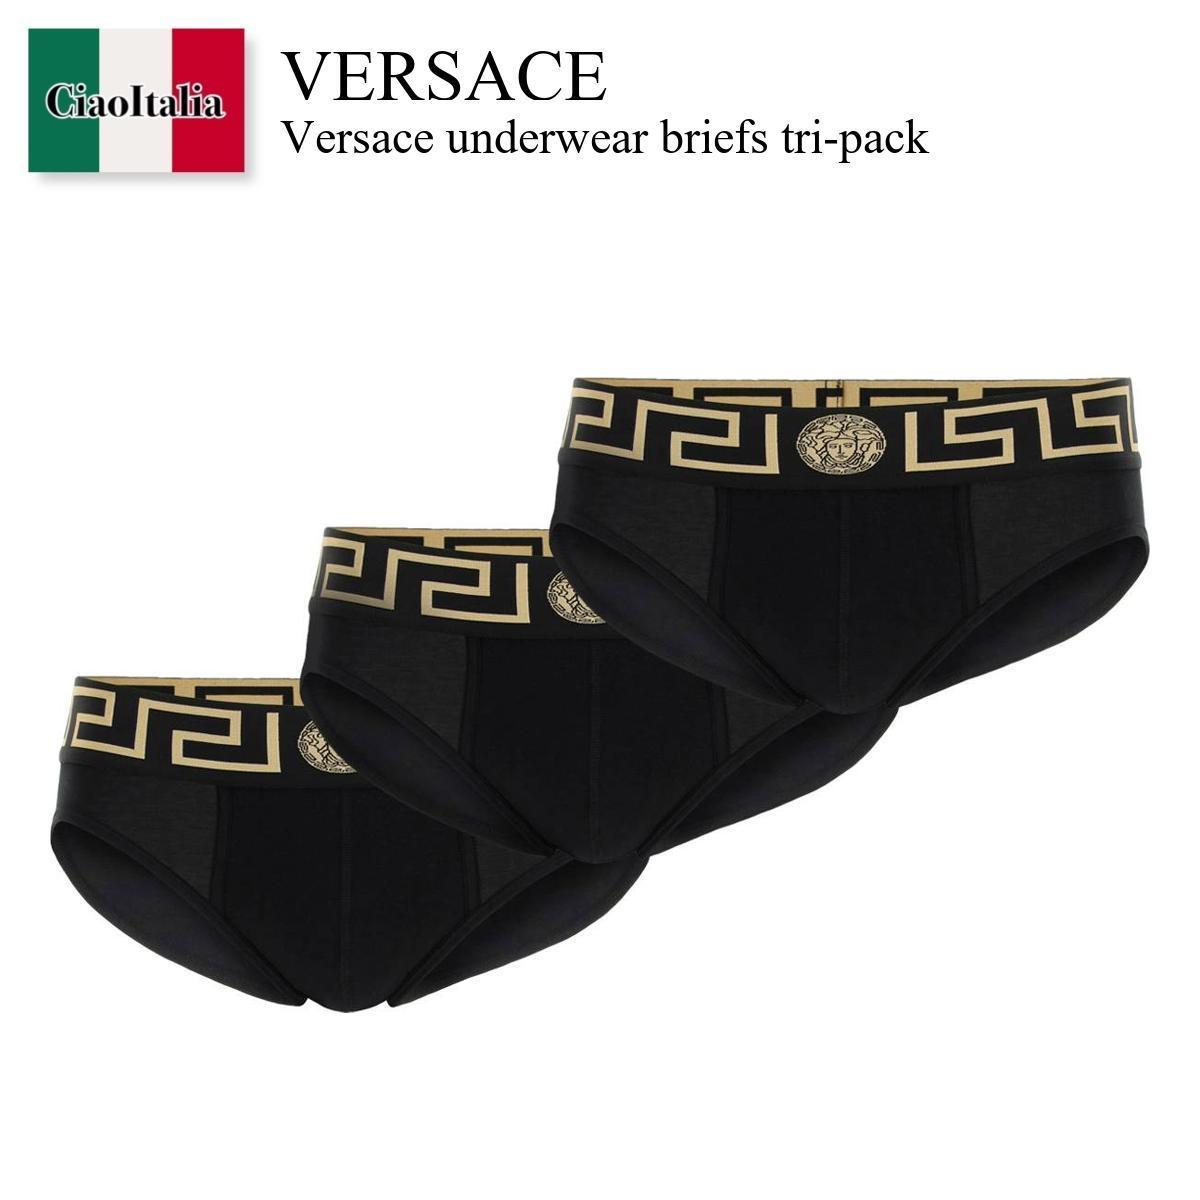 versace ヴェルサーチェ / Versace Underwear Briefs Tri-Pack / AU10327 A232741 / AU10327 A232741 A80G / AU10327A232741A80G / AU10327A232741 / ブリーフ / 「正規品補償」「VIP価格販売」「お買い物サポート」